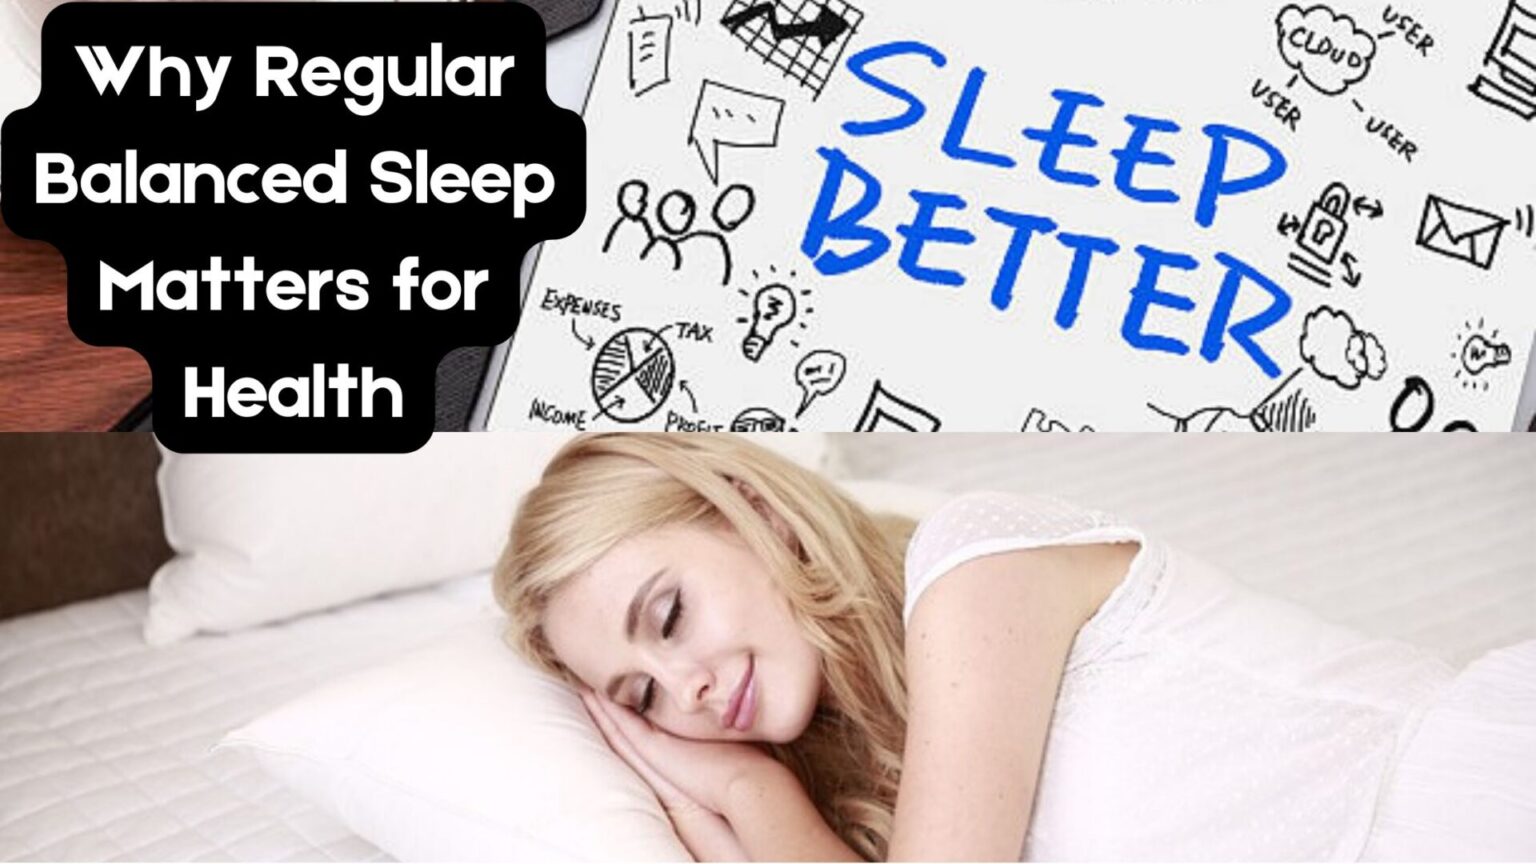 Why Regular Balanced Sleep Matters for Health